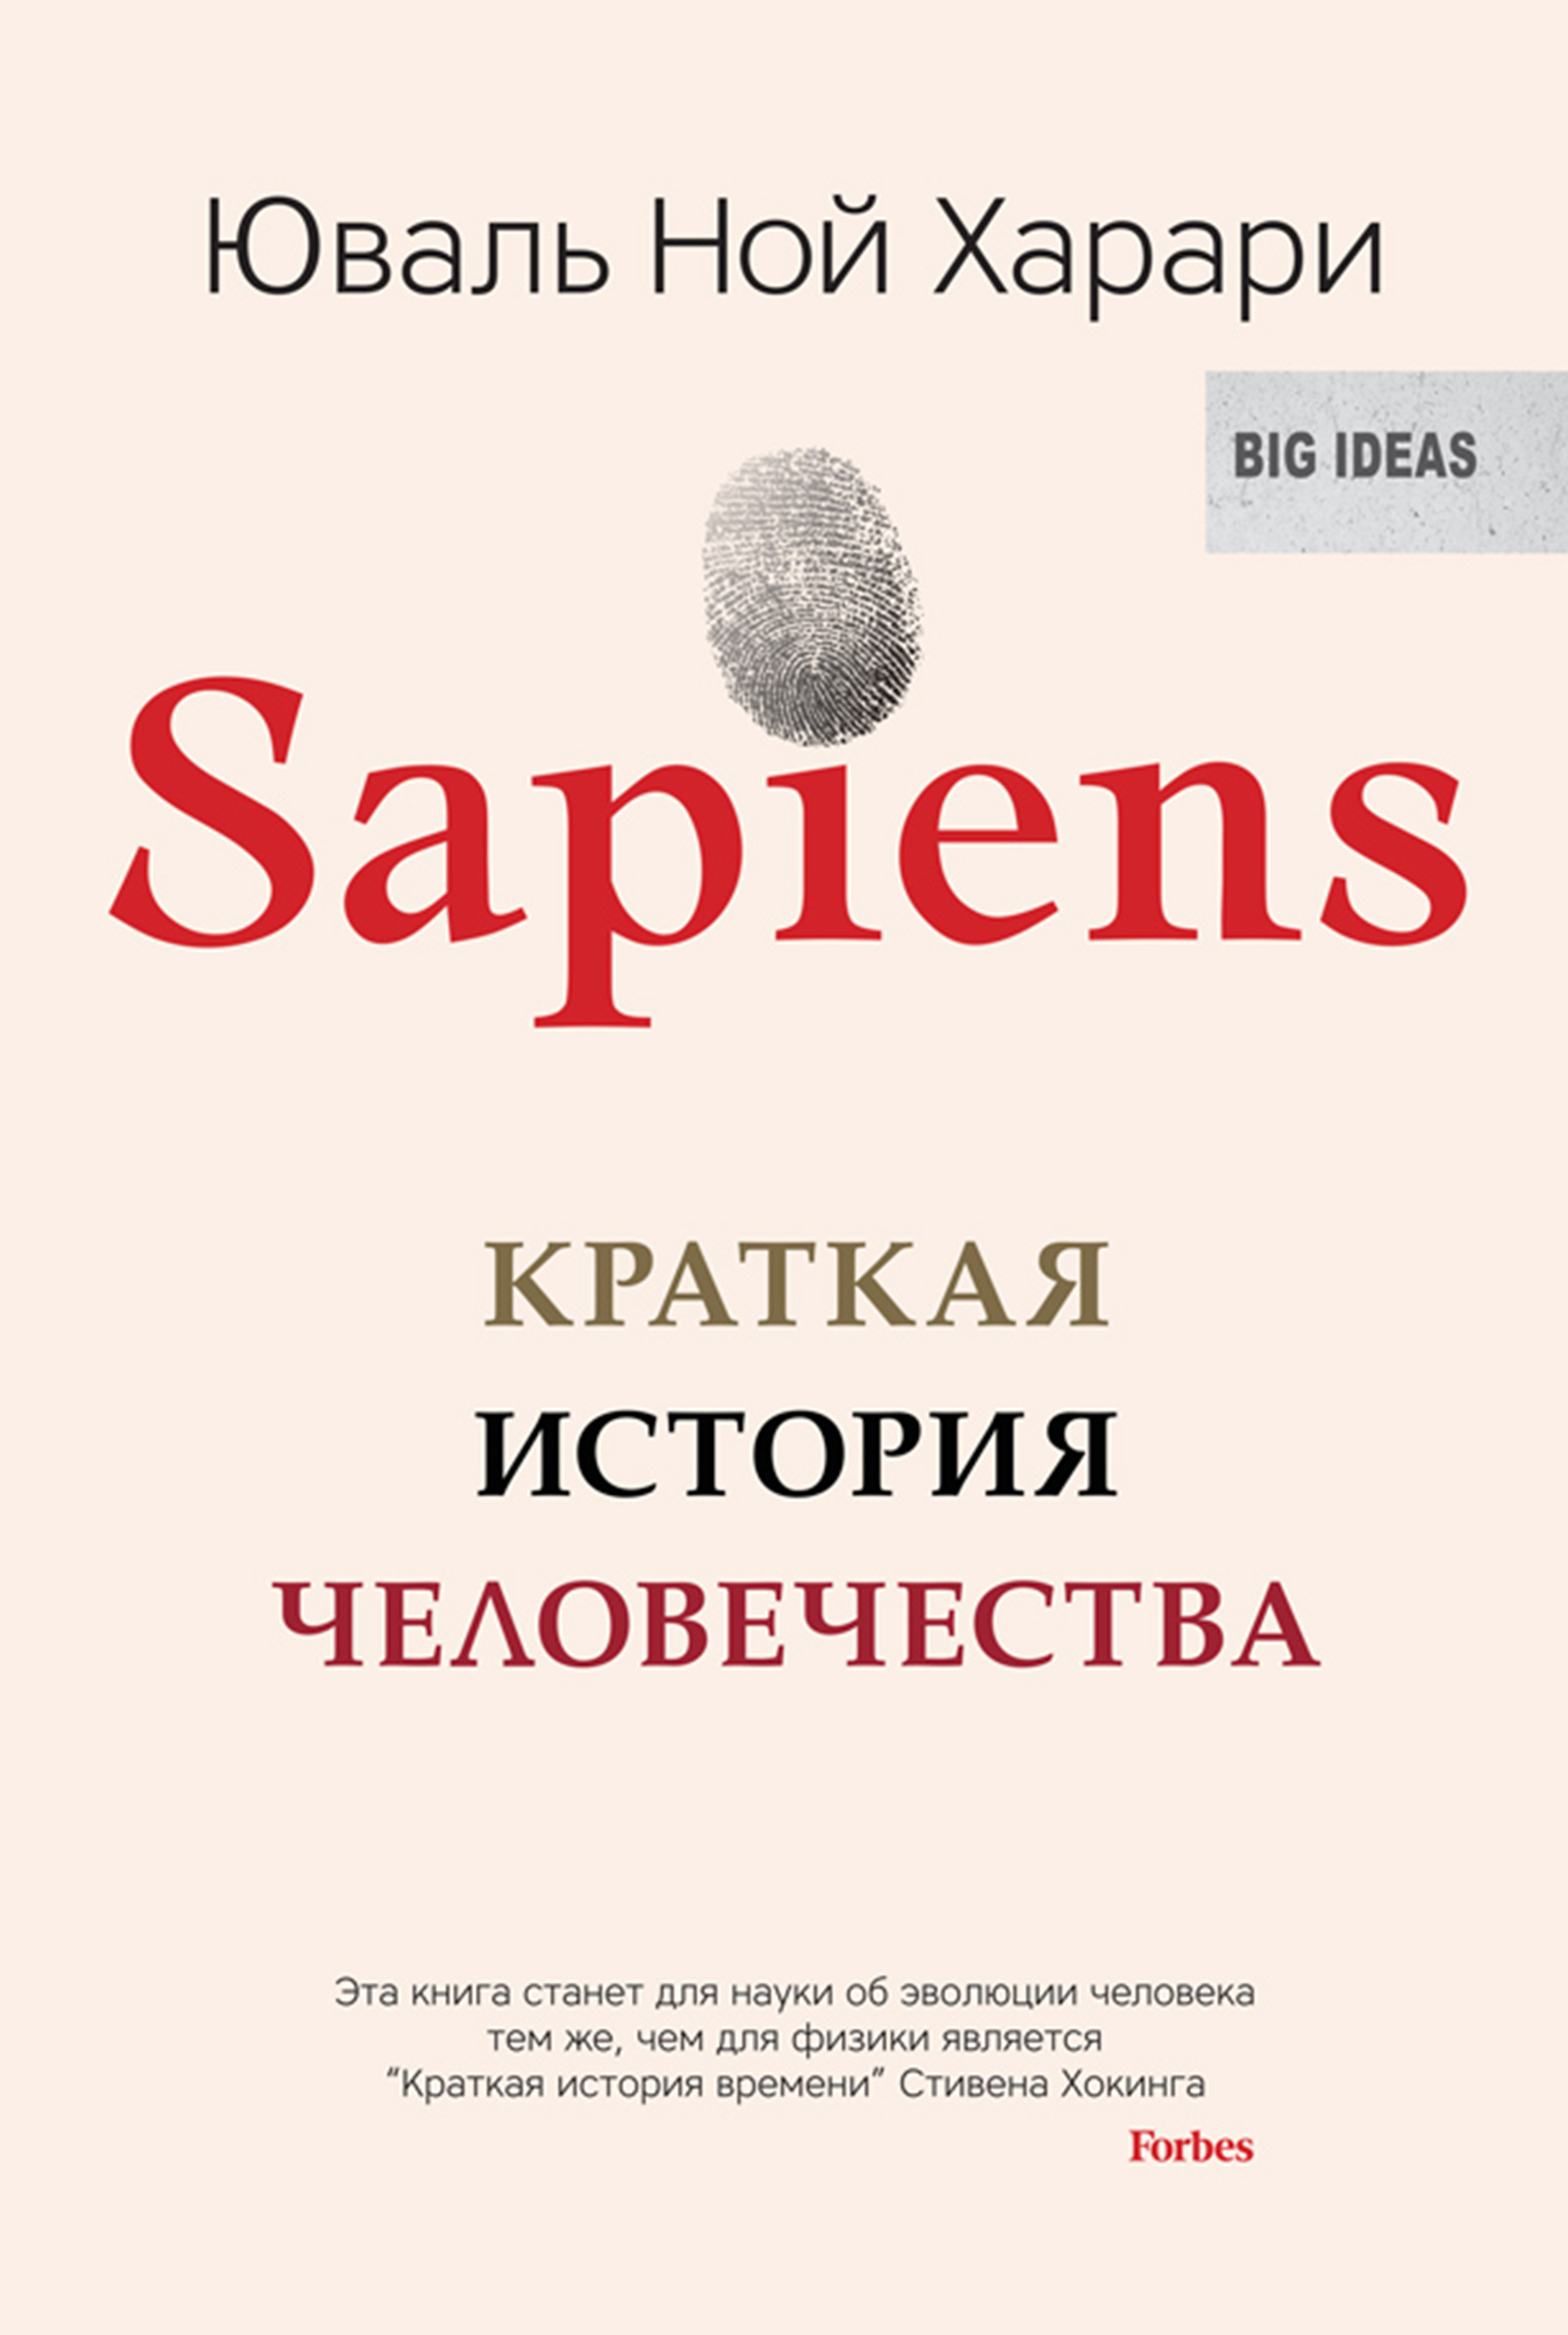 Book “Sapiens” by Юваль Ной Харари